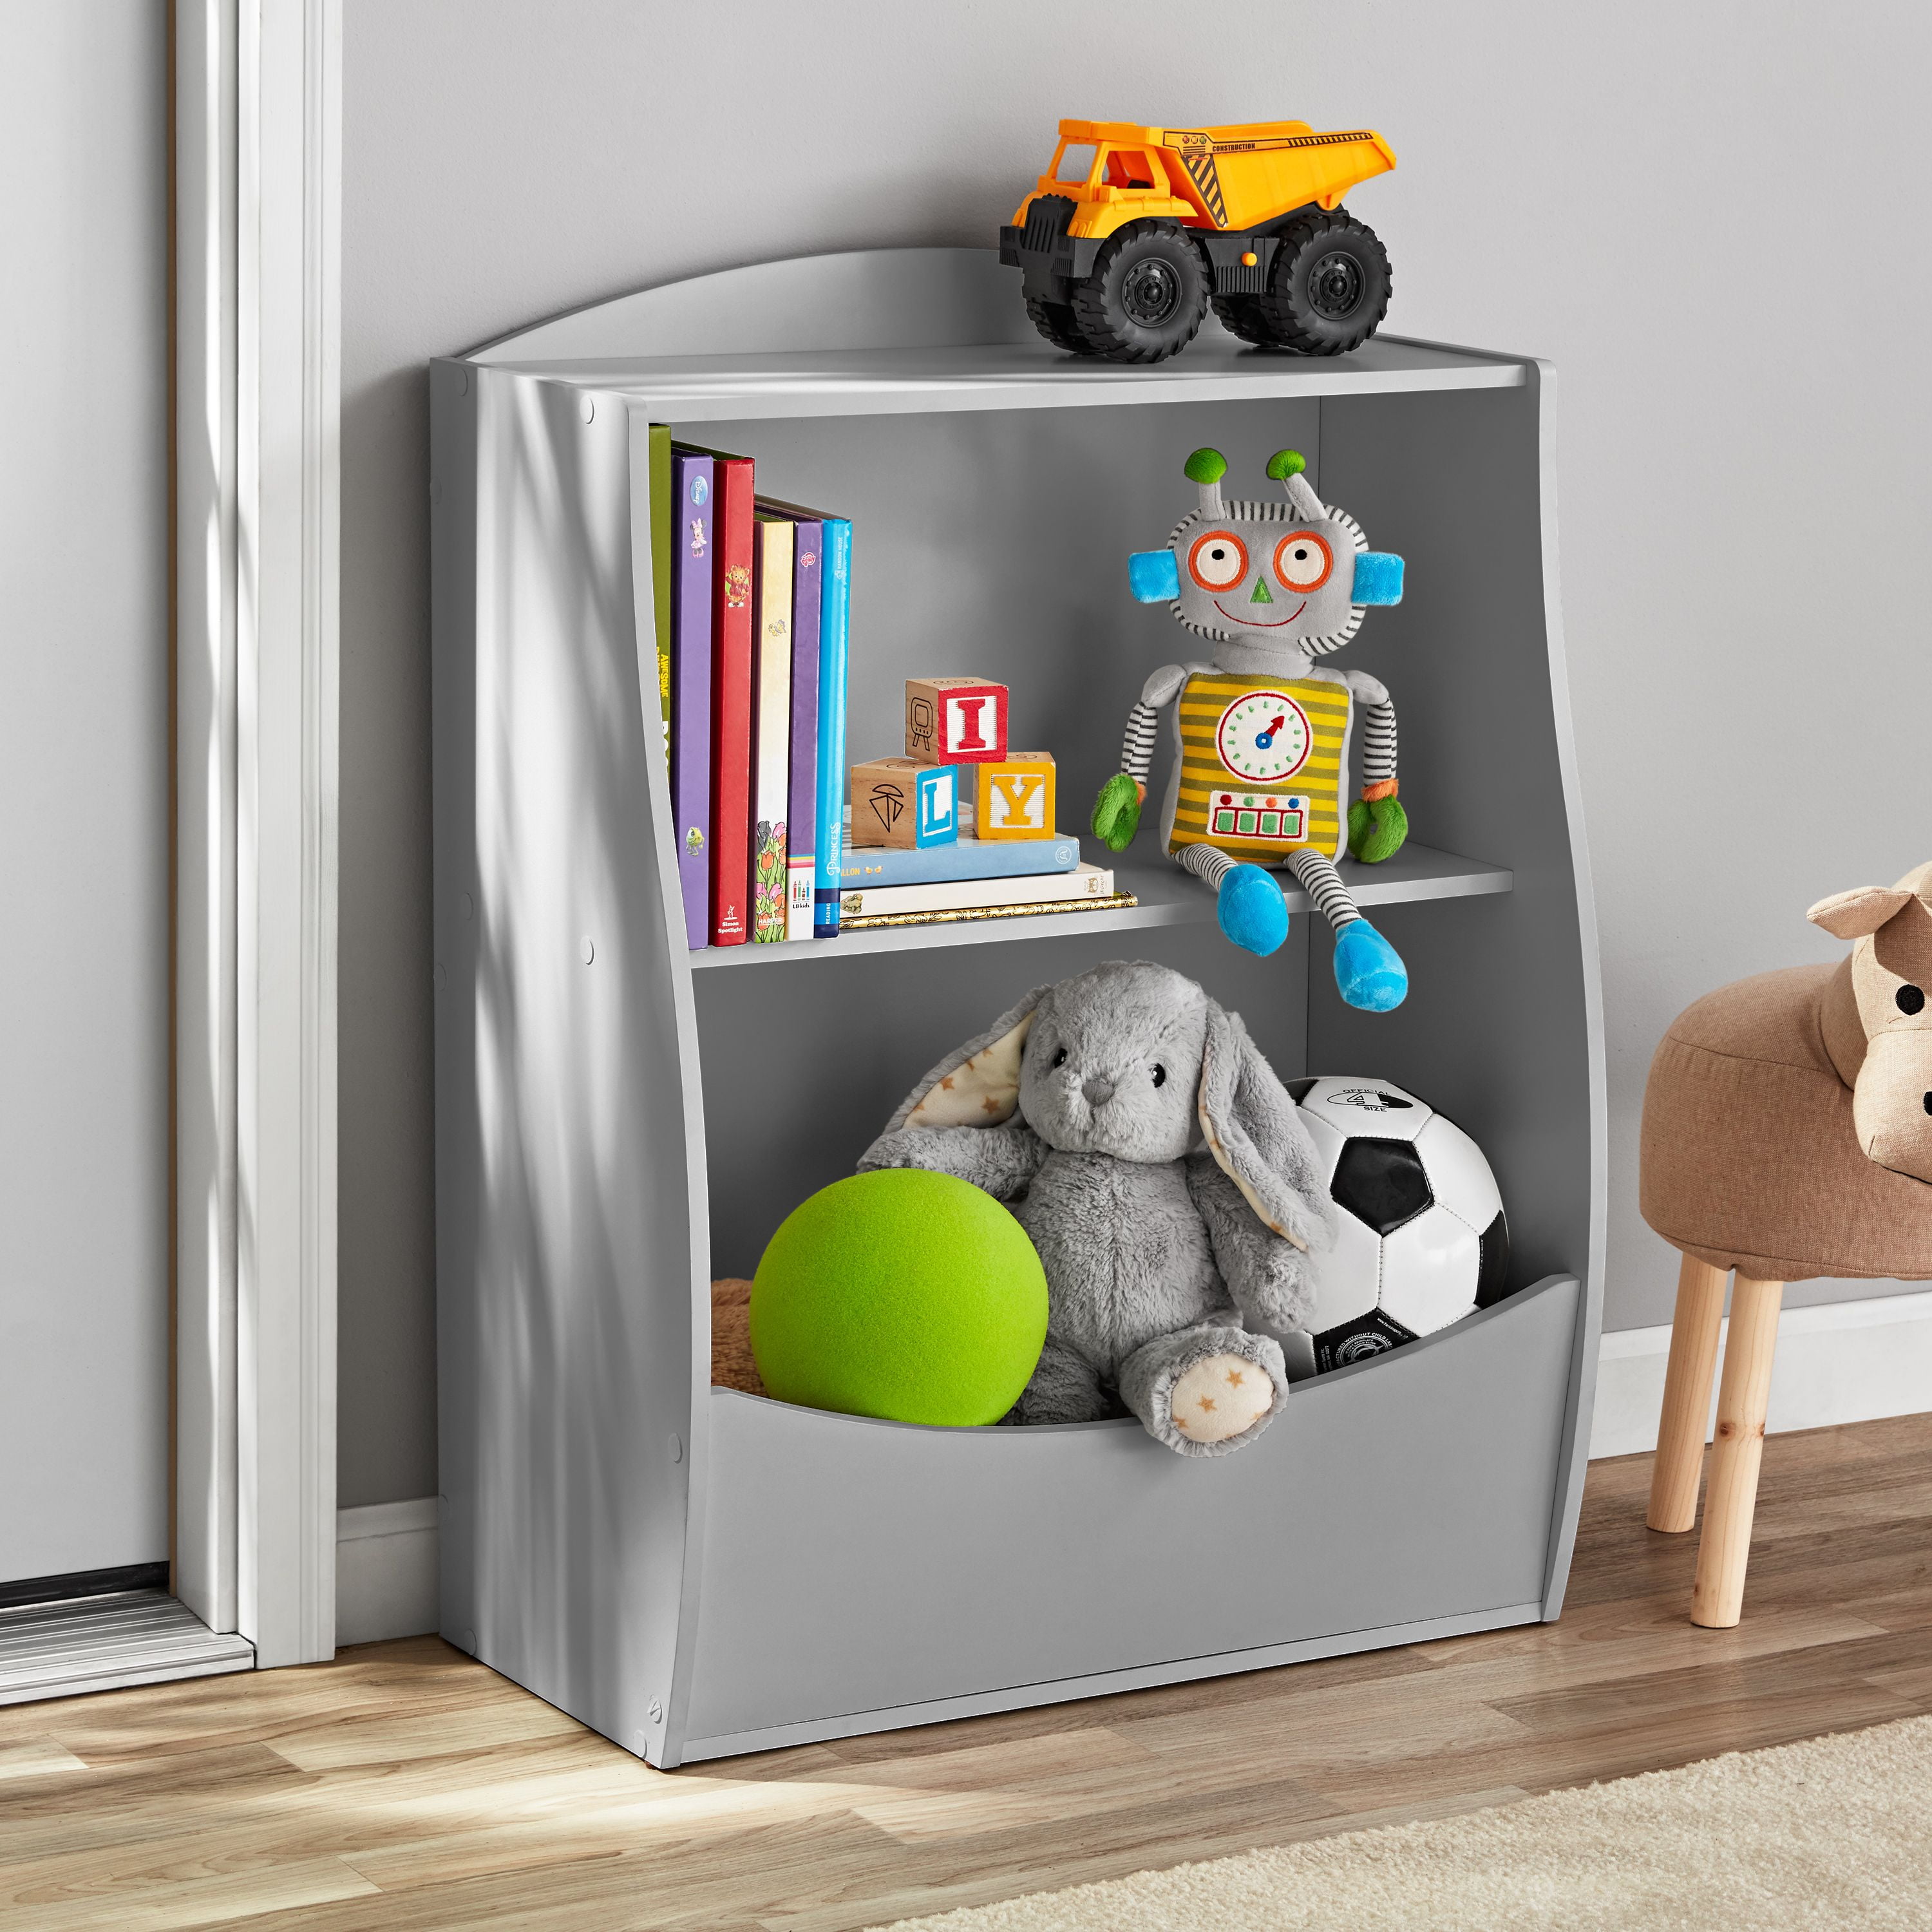 Your Zone Kids Bin Storage And Book, Toy Storage Bin Bookcase